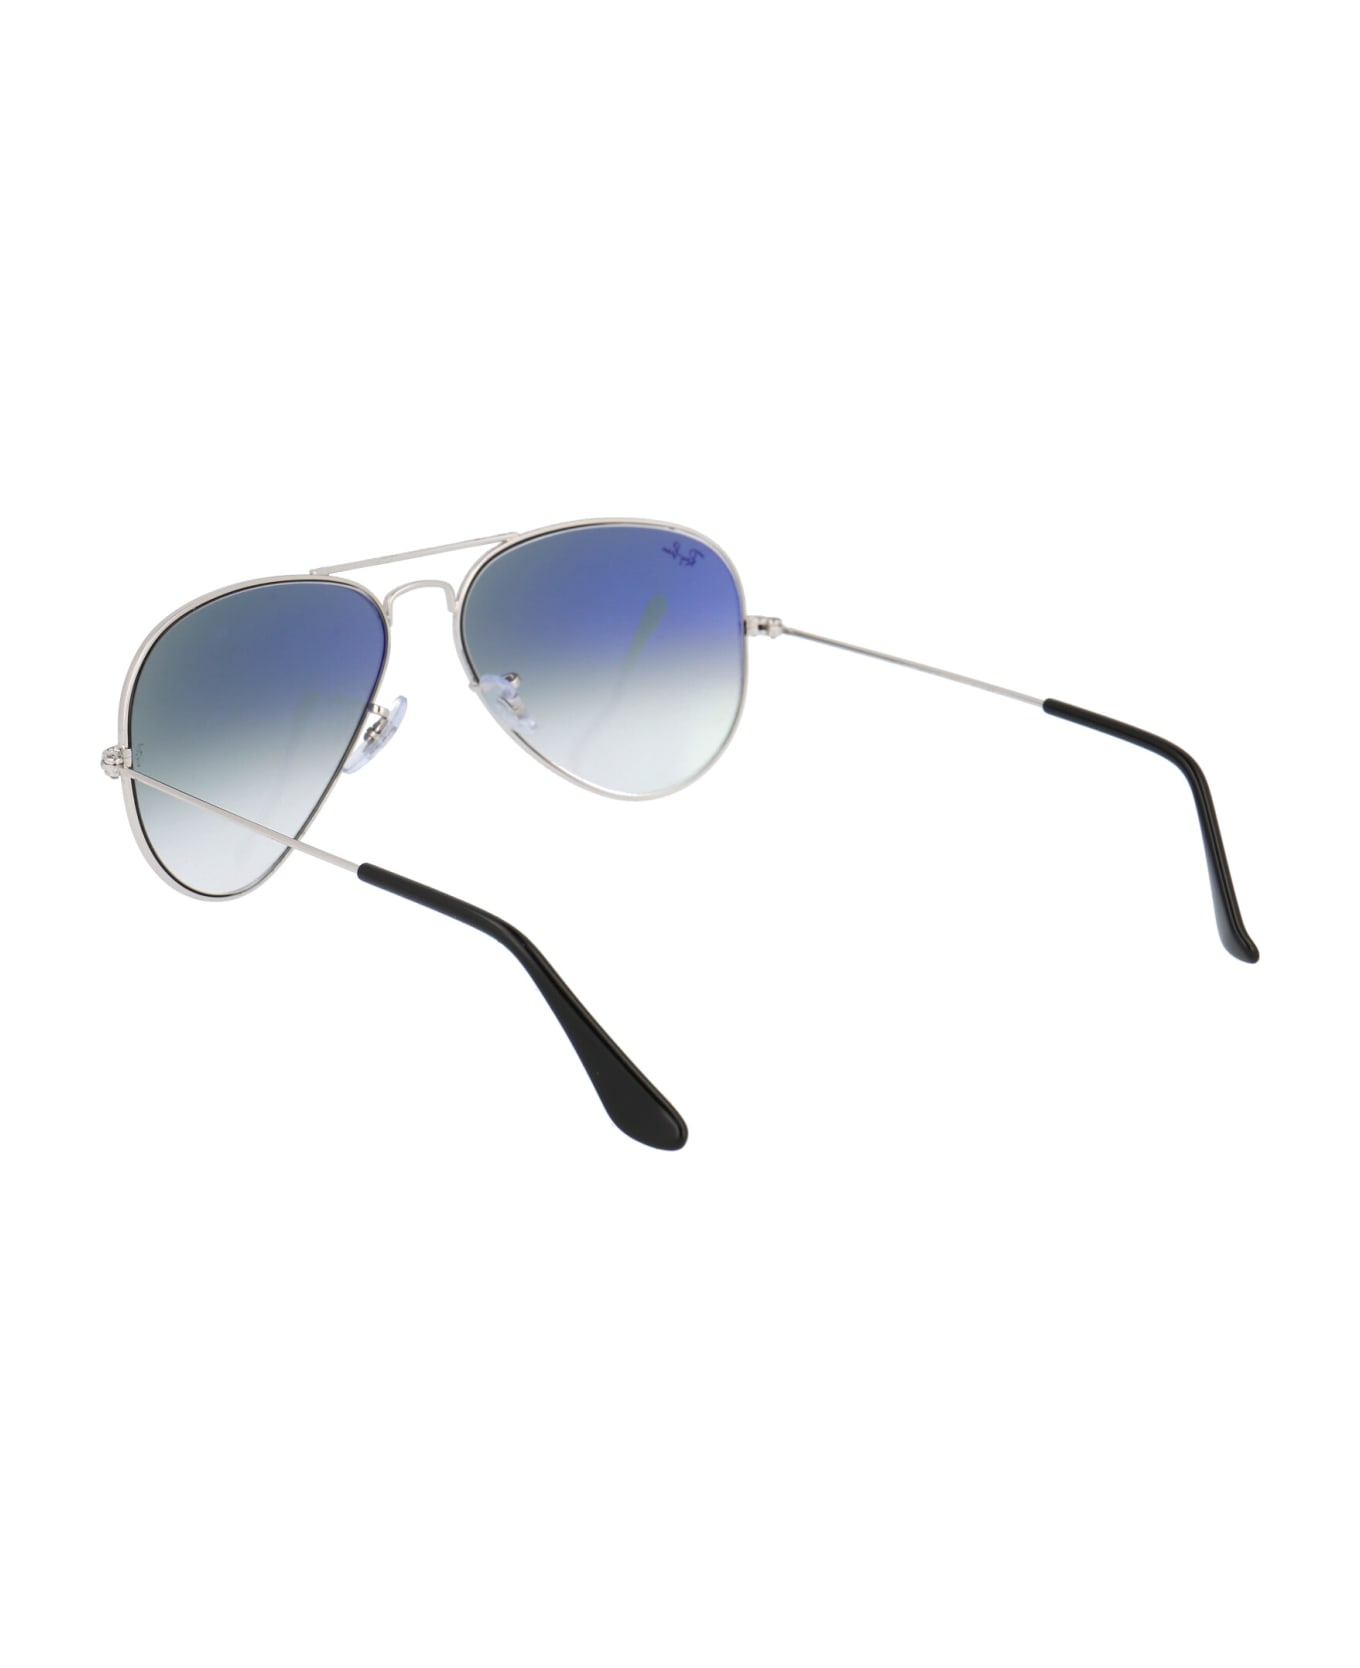 Ray-Ban Aviator Sunglasses - 003/3F SILVER